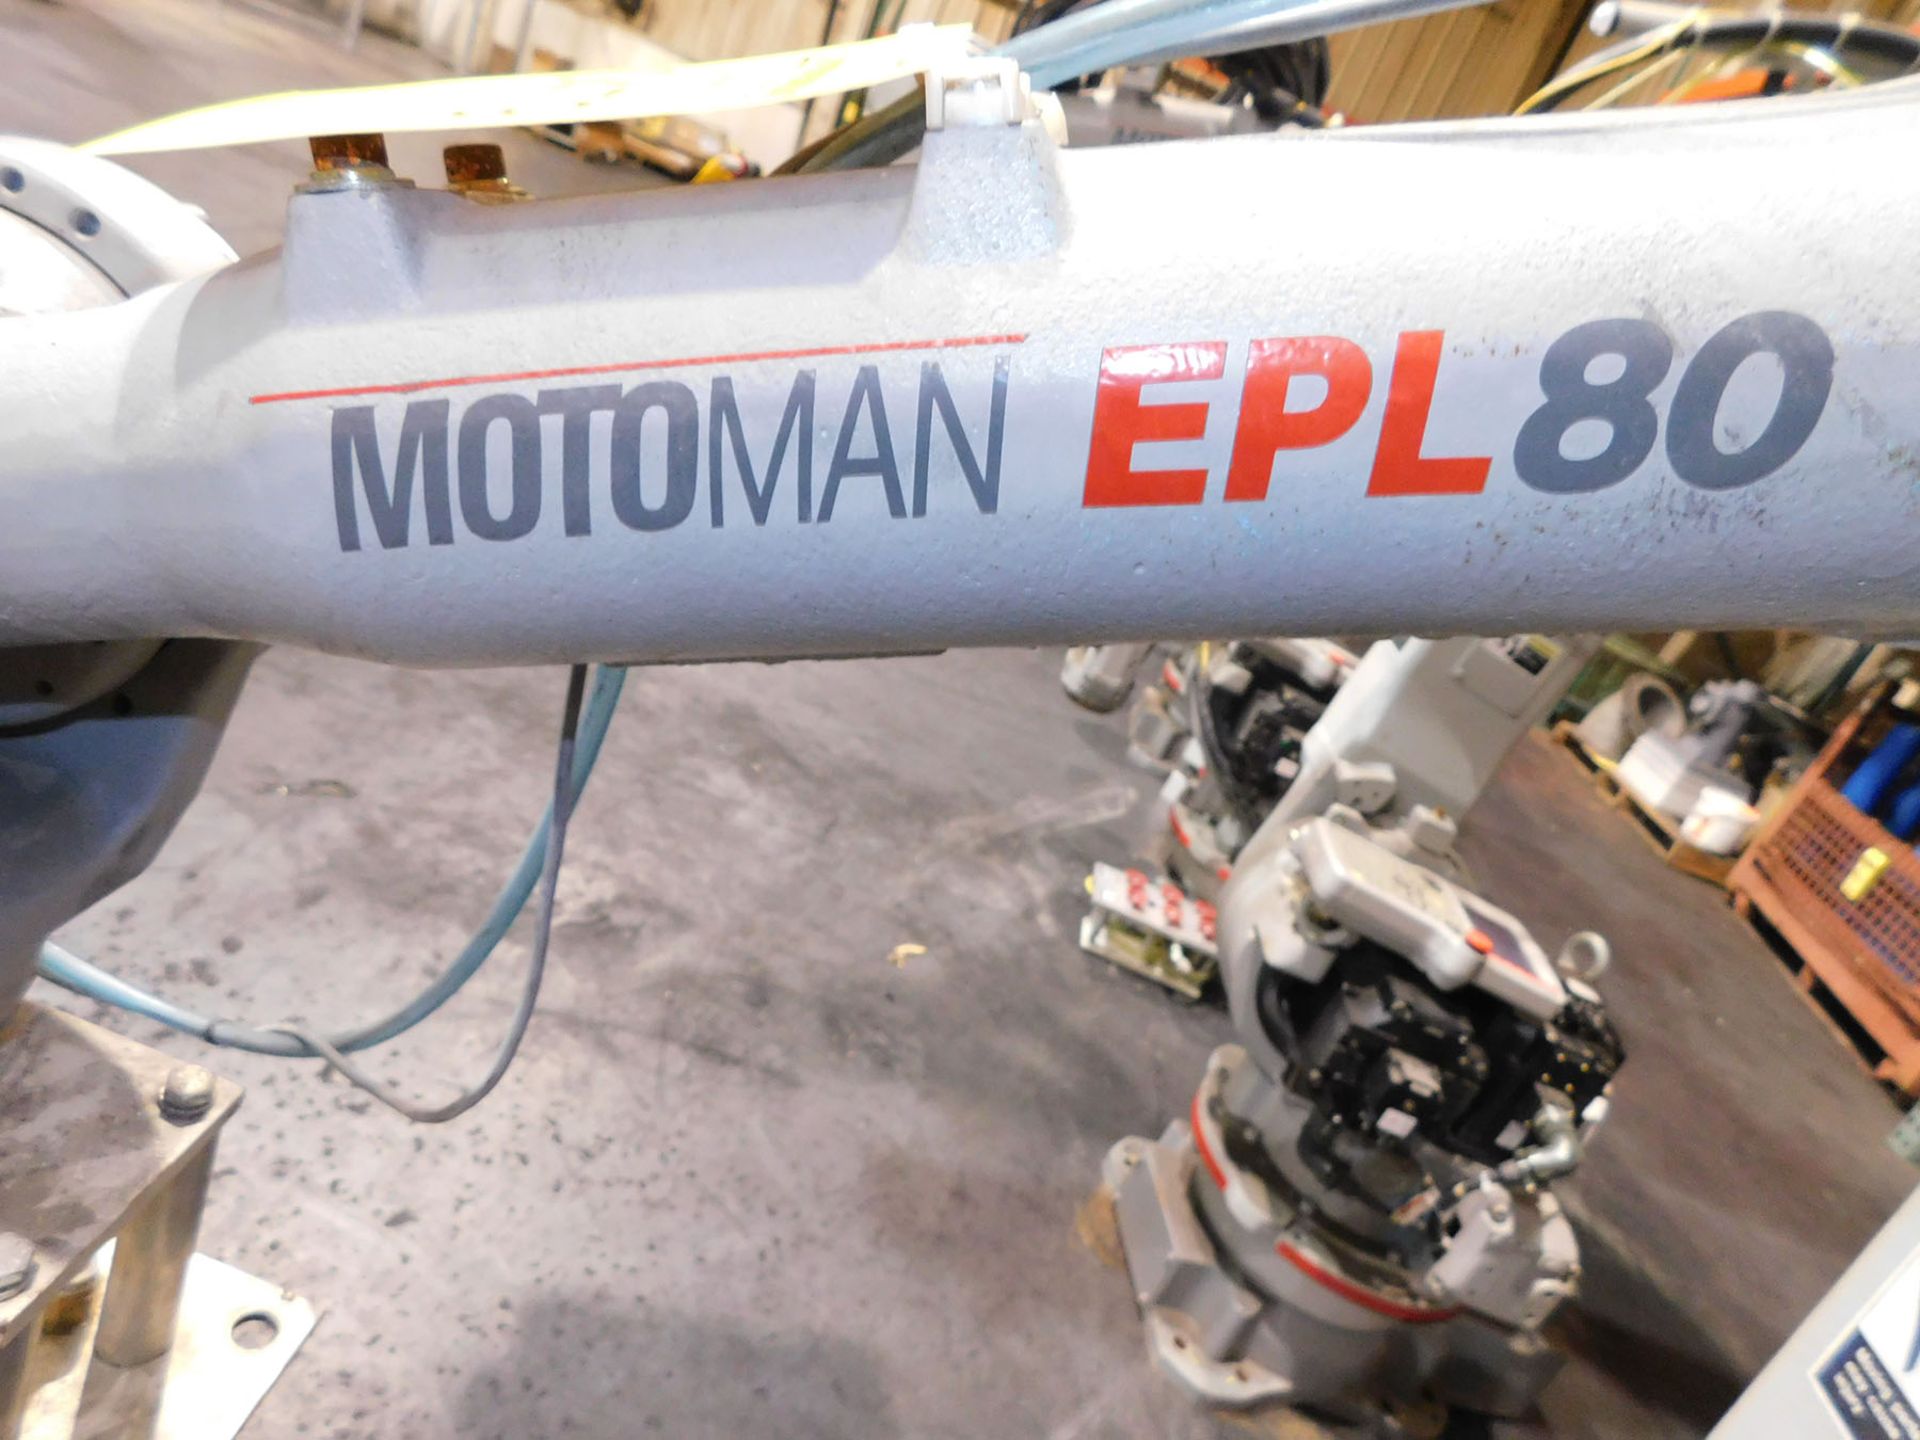 MOTOMAN EPL80 ROBOT; S/N S5M018-1-4, 80-KG PAYLOAD, DATE 2005.07 - Image 2 of 4